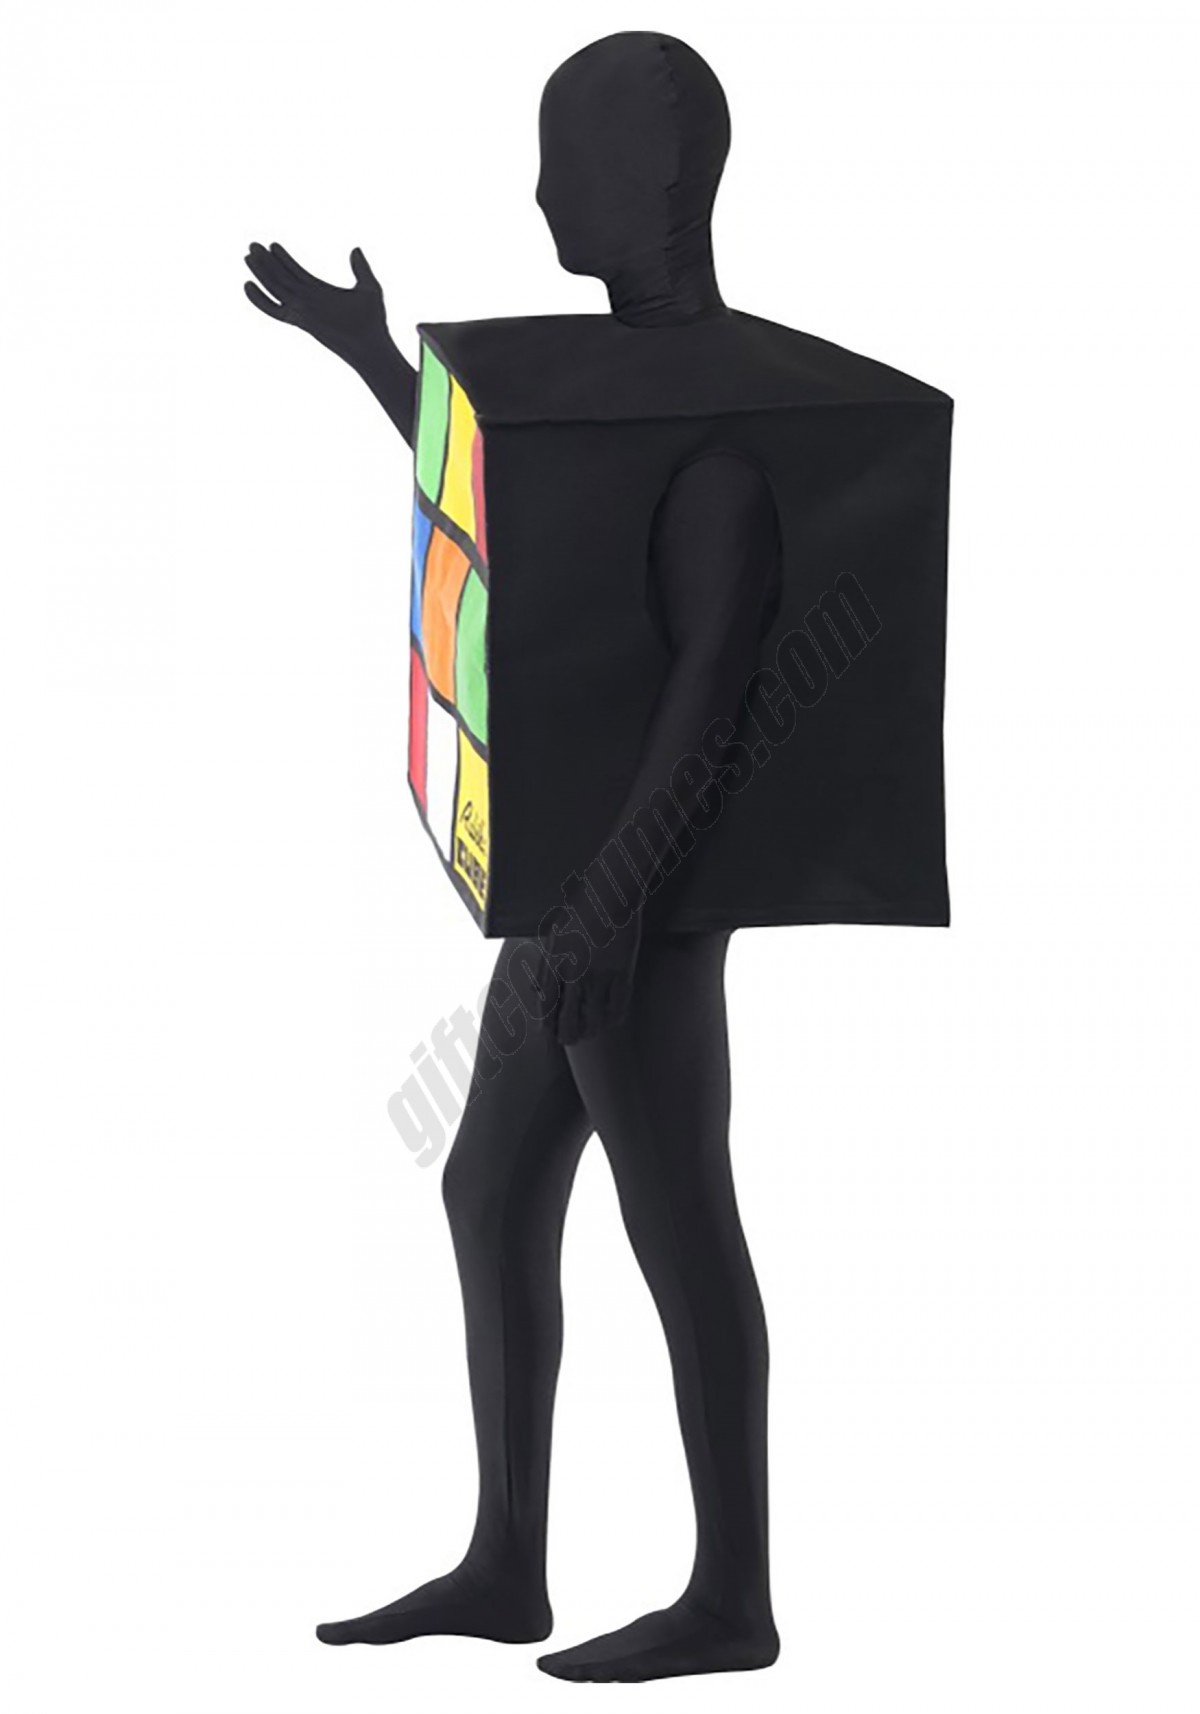 Rubik's Cube Costume for Adults - Women's - -1